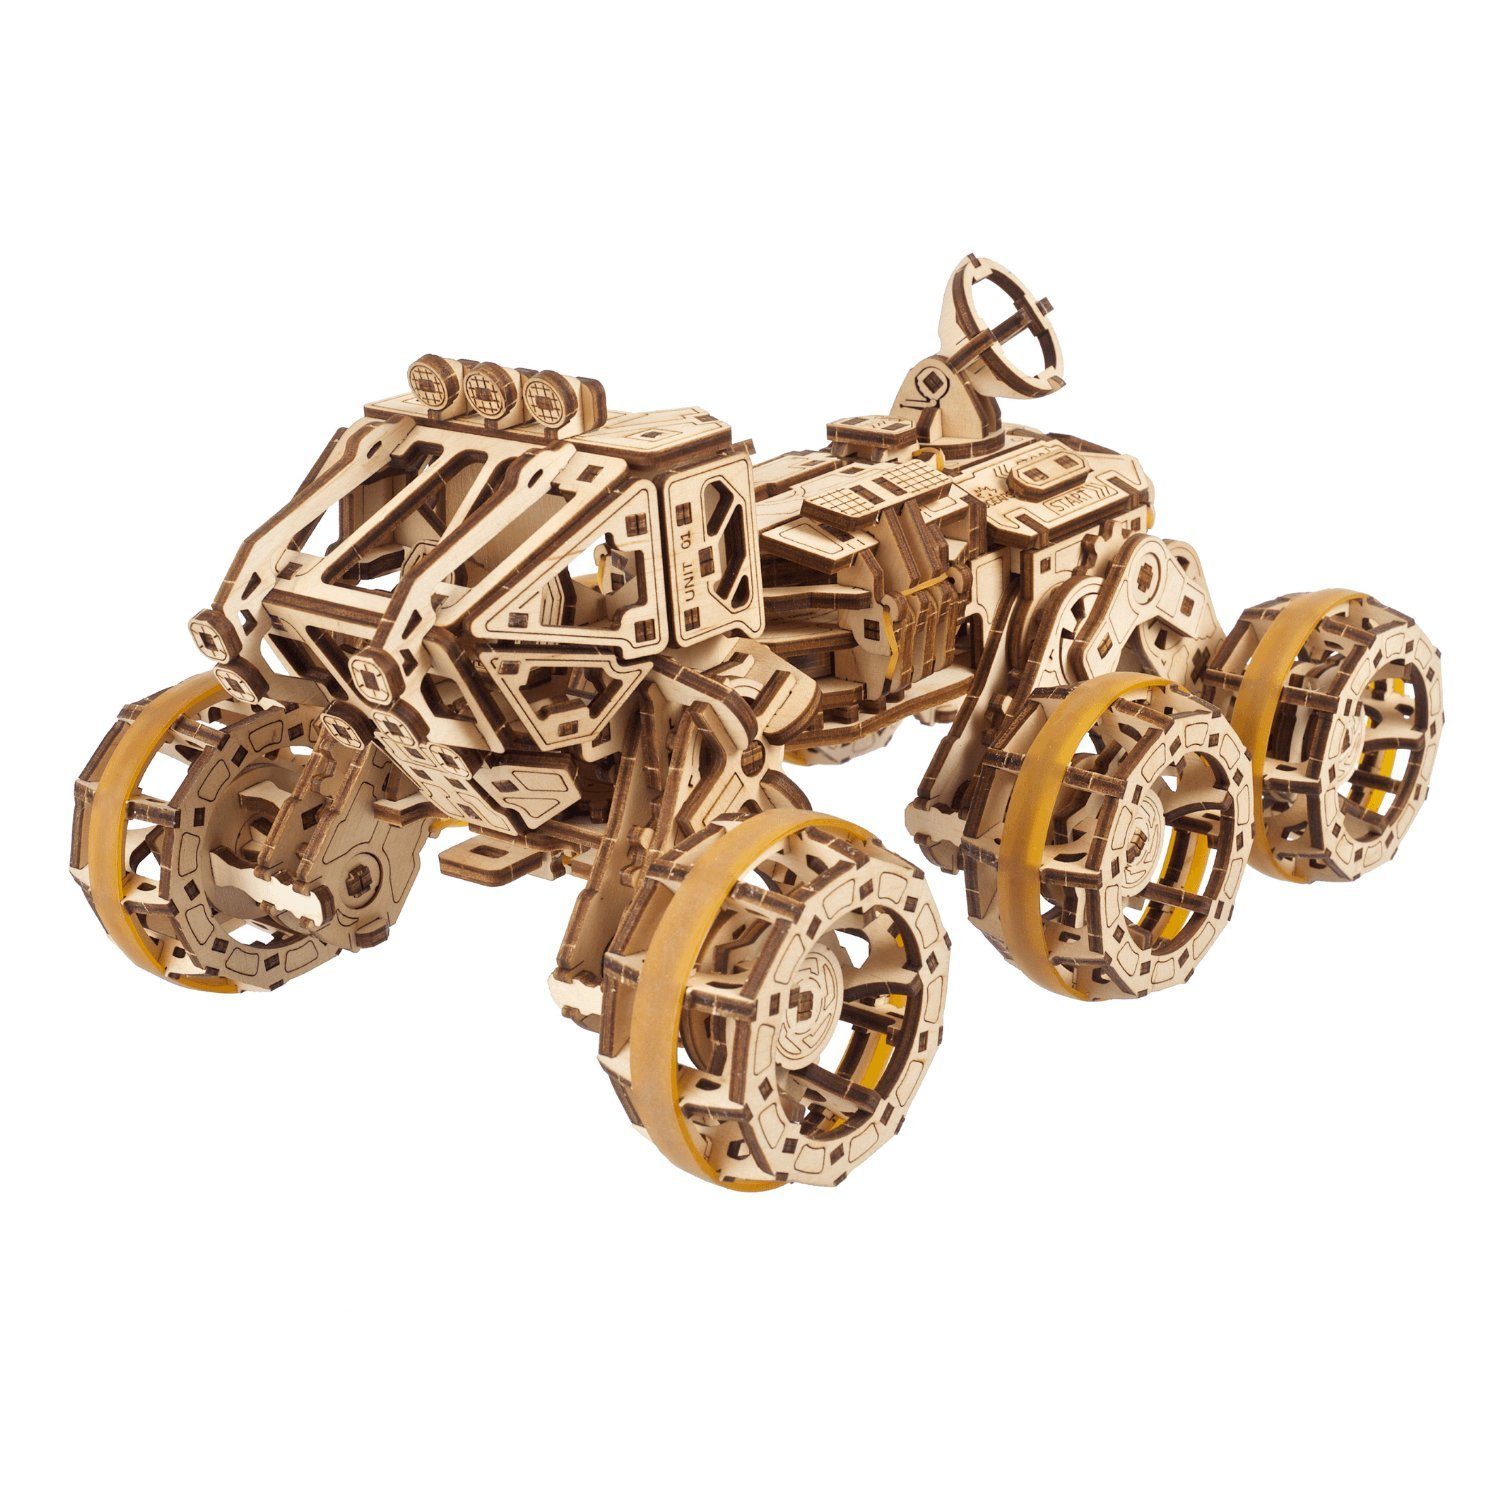 Mars-Rover Ugears Holzpuzzle, 562 UGEARS Puzzle Puzzleteile Mechanisches Bemannter